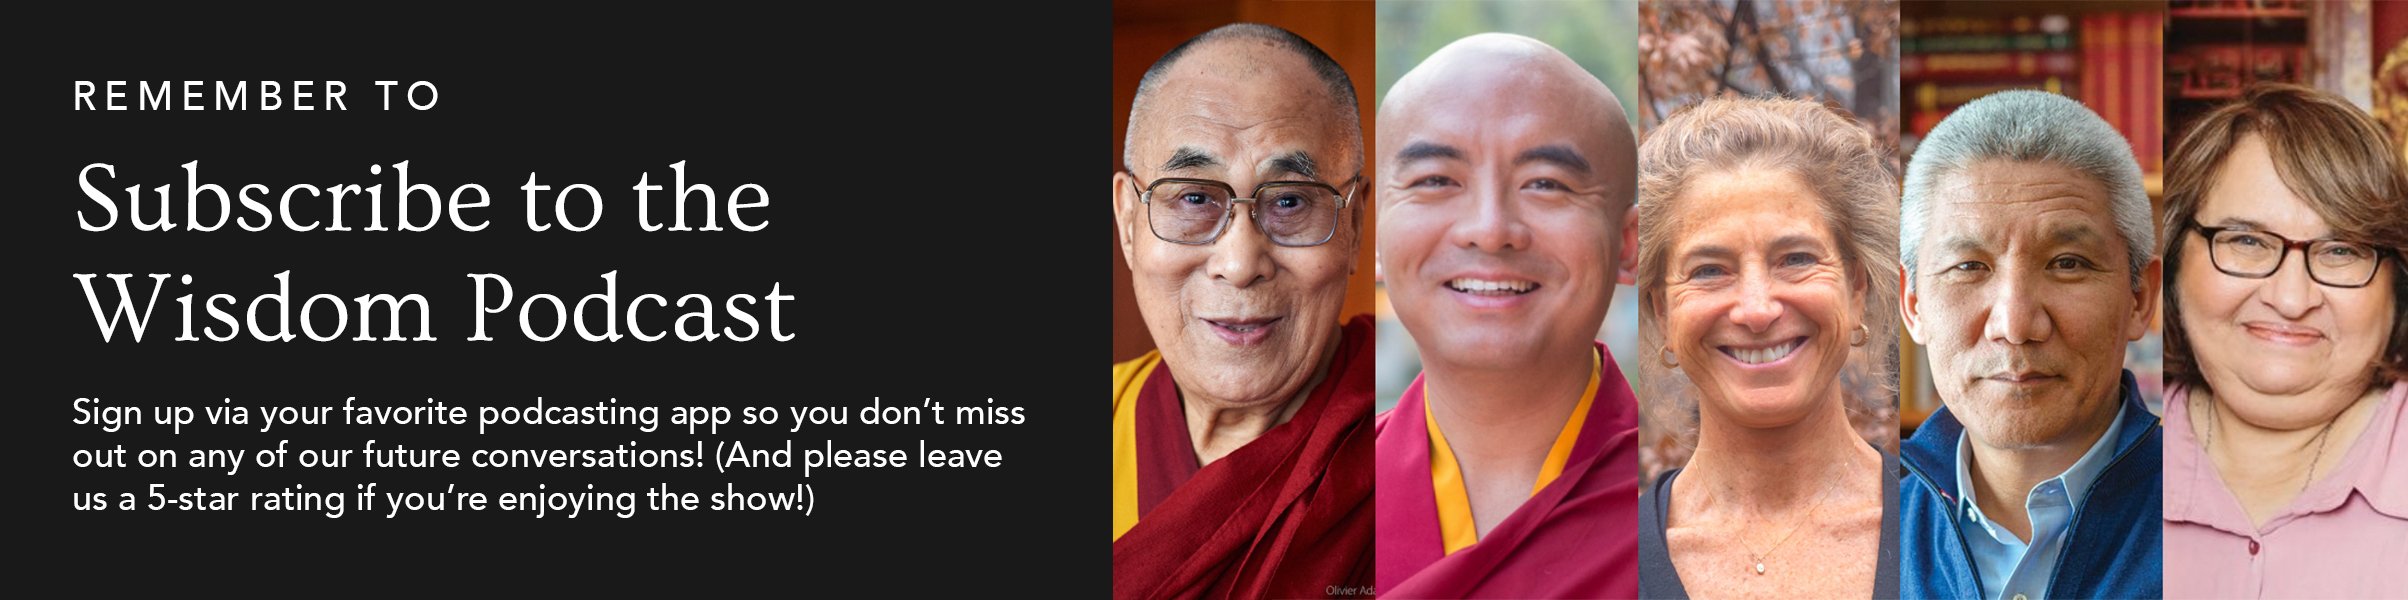 wisdom podcast buddhist buddhism